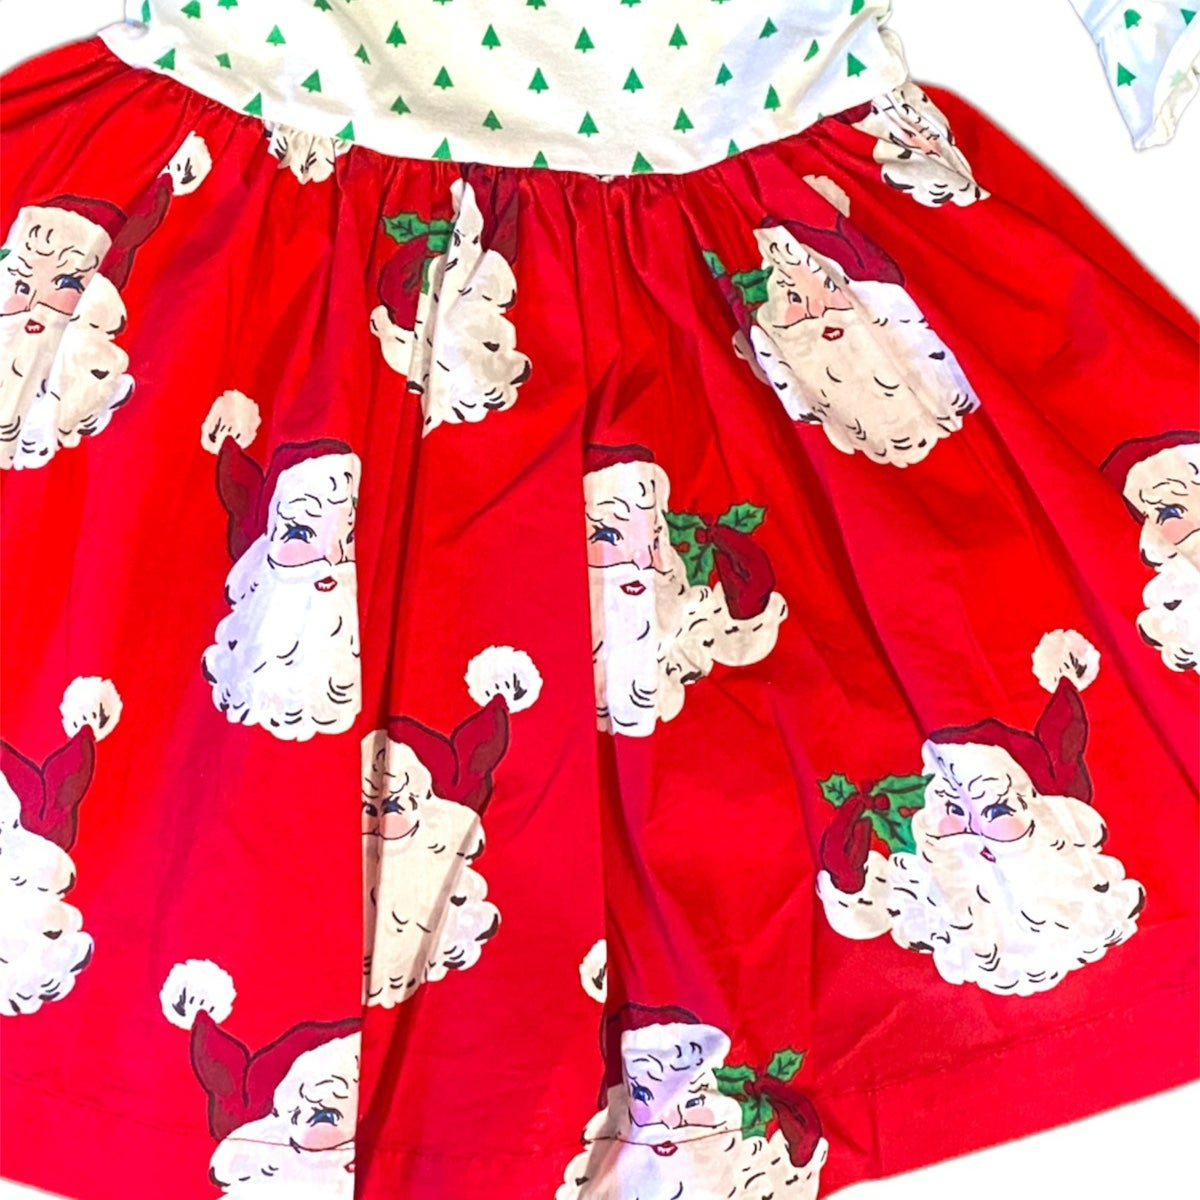 Size 2 Christmas swing dress with Santa